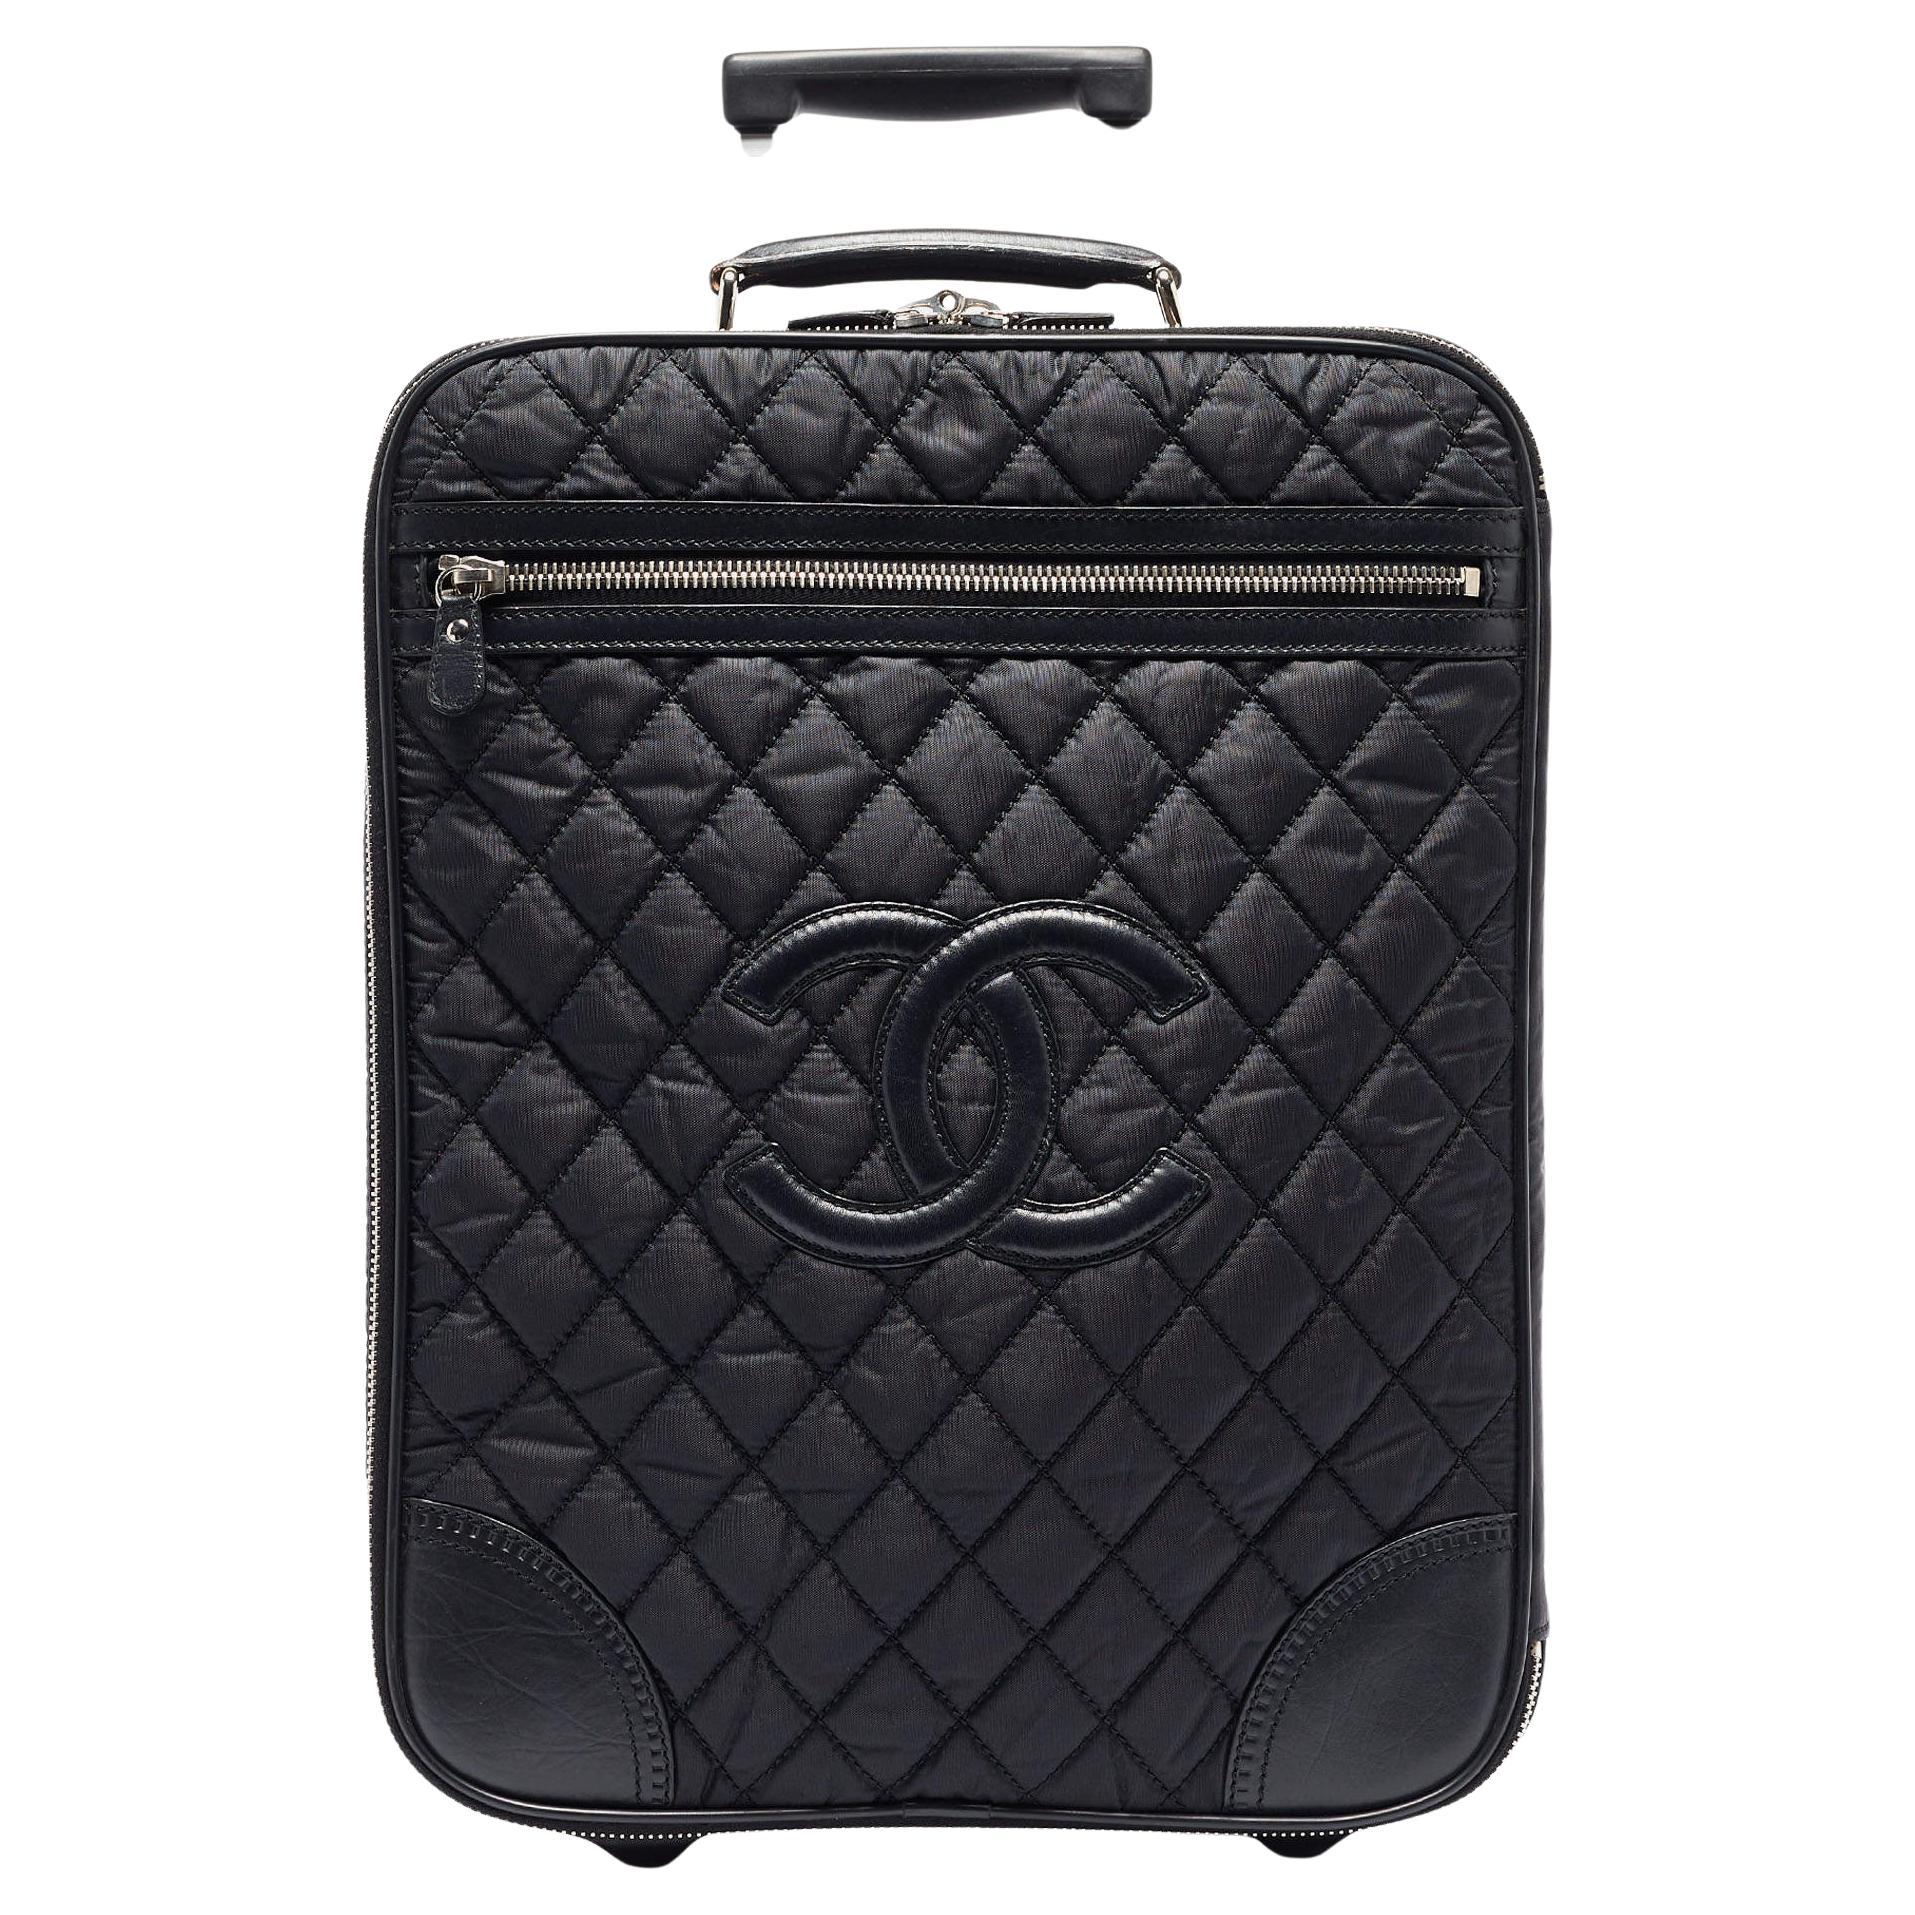 Chanel Black Quilted Nylon 2 Wheeled CC Luggage (Bagages à 2 roues en nylon matelassé)